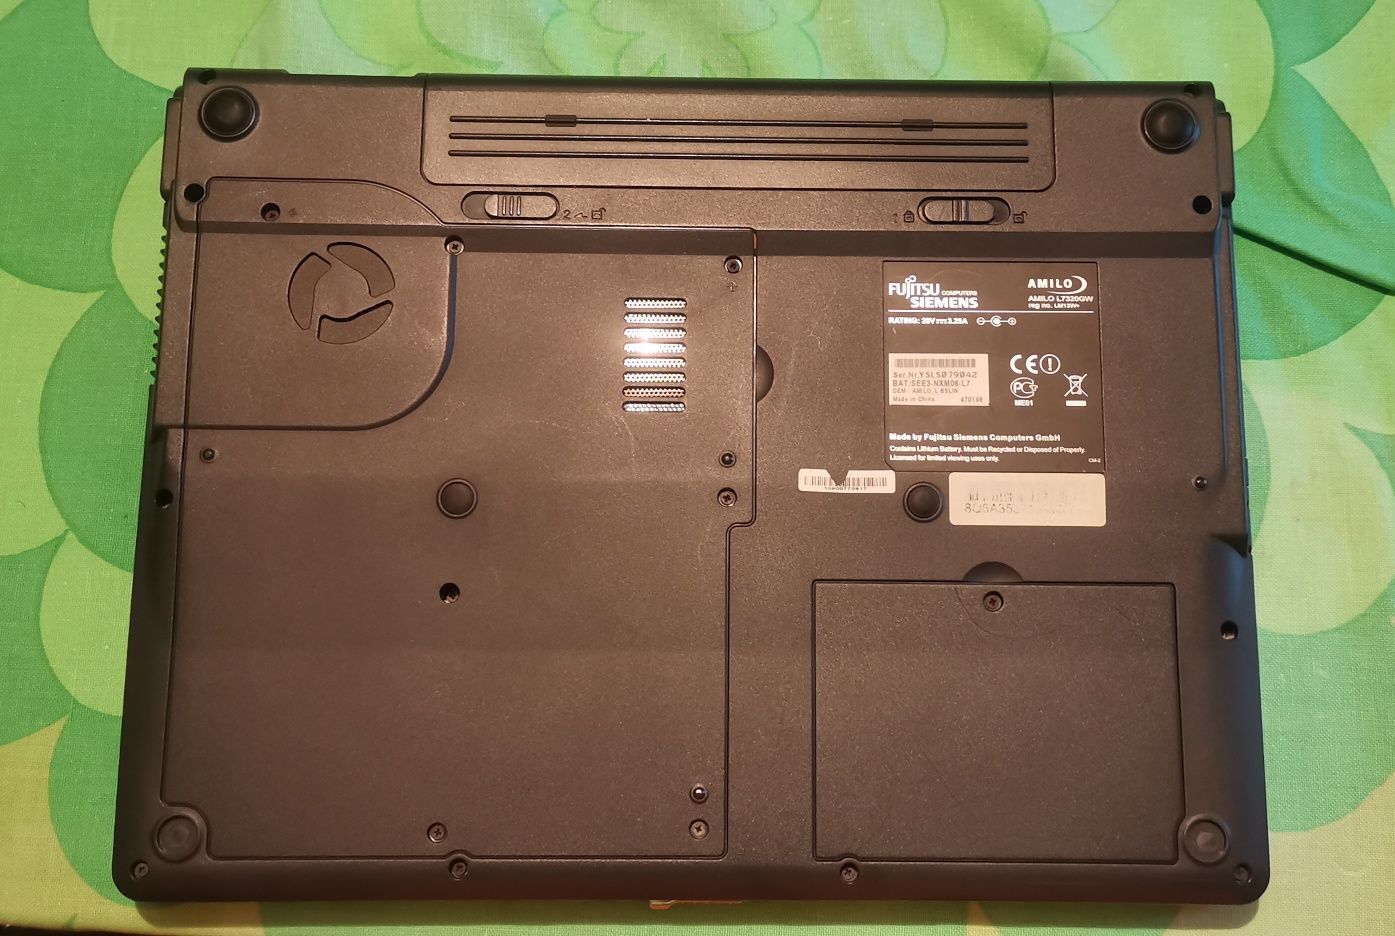 Laptop Fujitsu Siemens